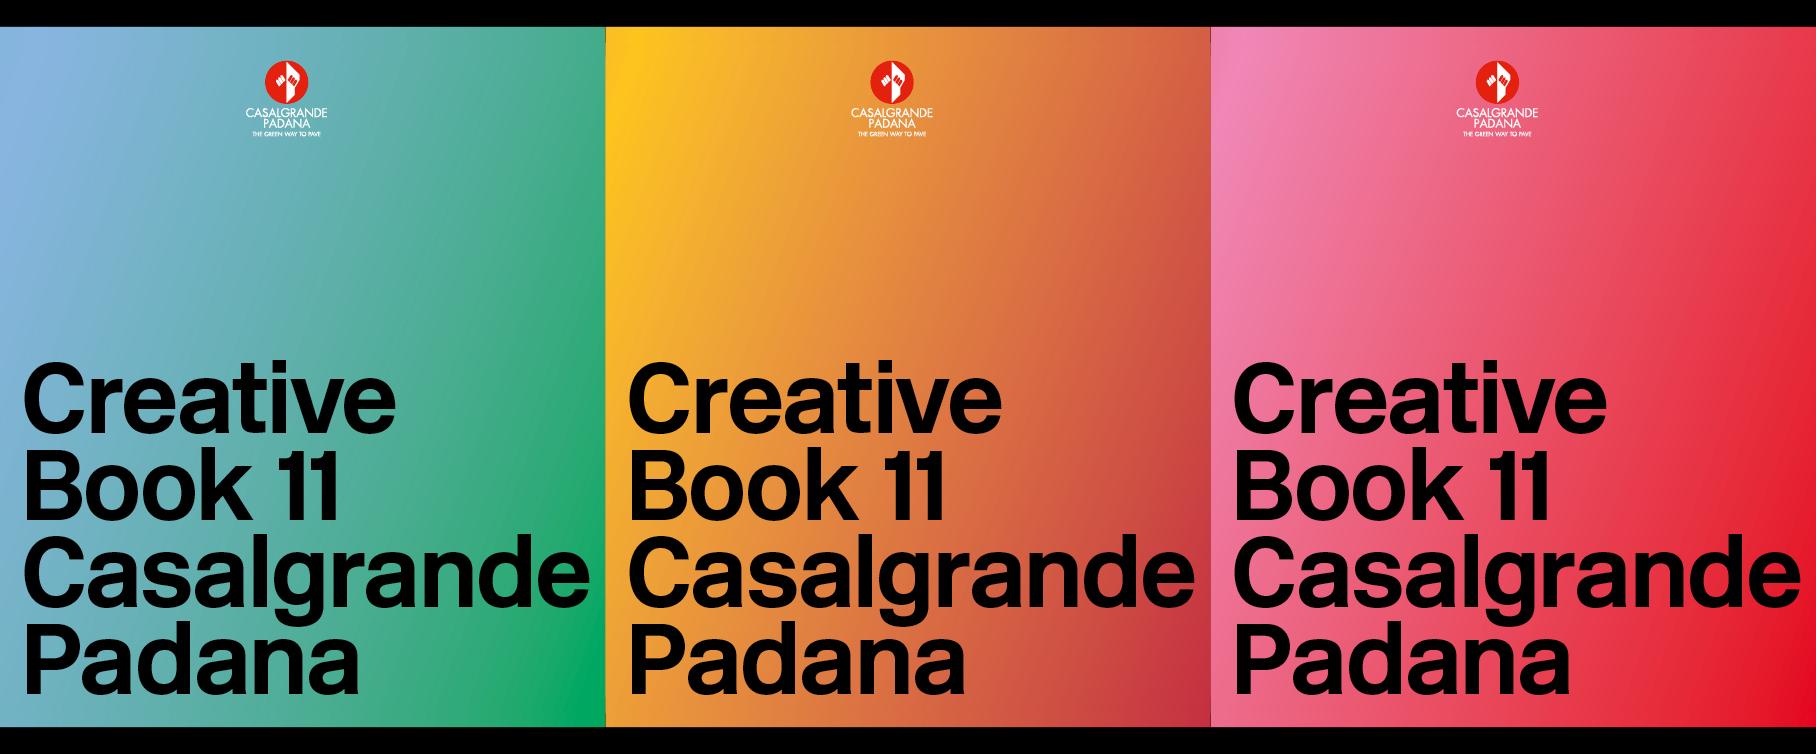 Creative Book | Casalgrande Padana